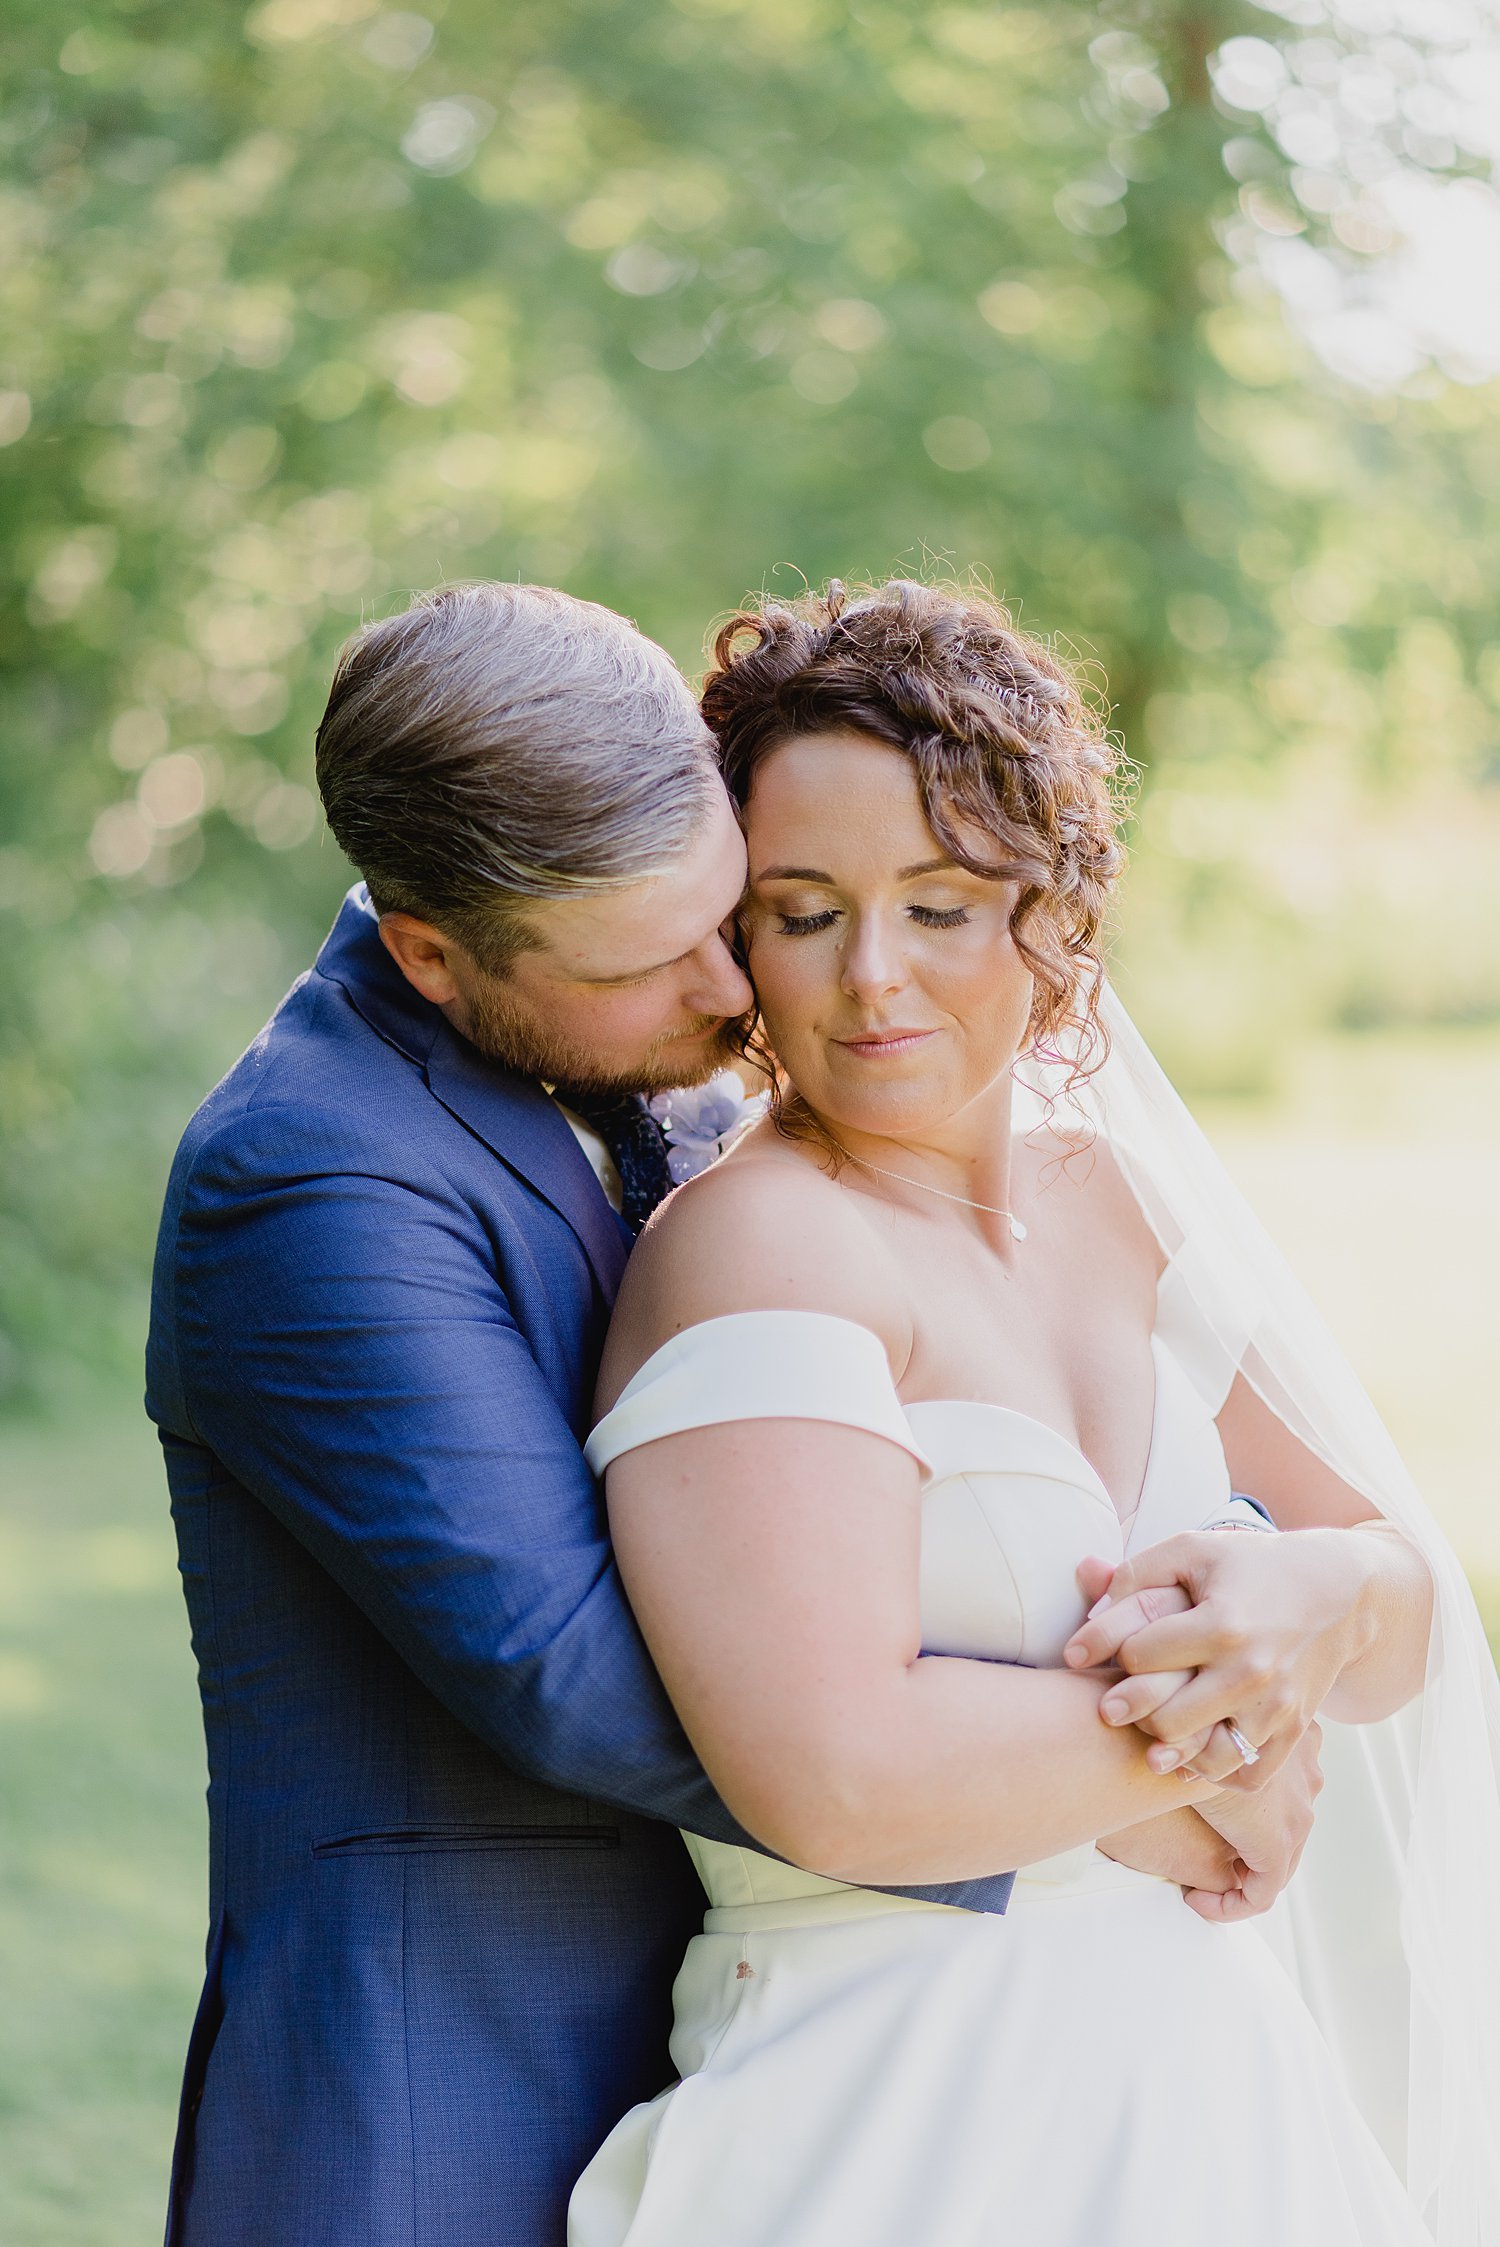 Elegant Summer Backyard Tented Wedding in Sydenham, Ontario | Prince Edward County Wedding Photographer | Holly McMurter Photographs_0059.jpg